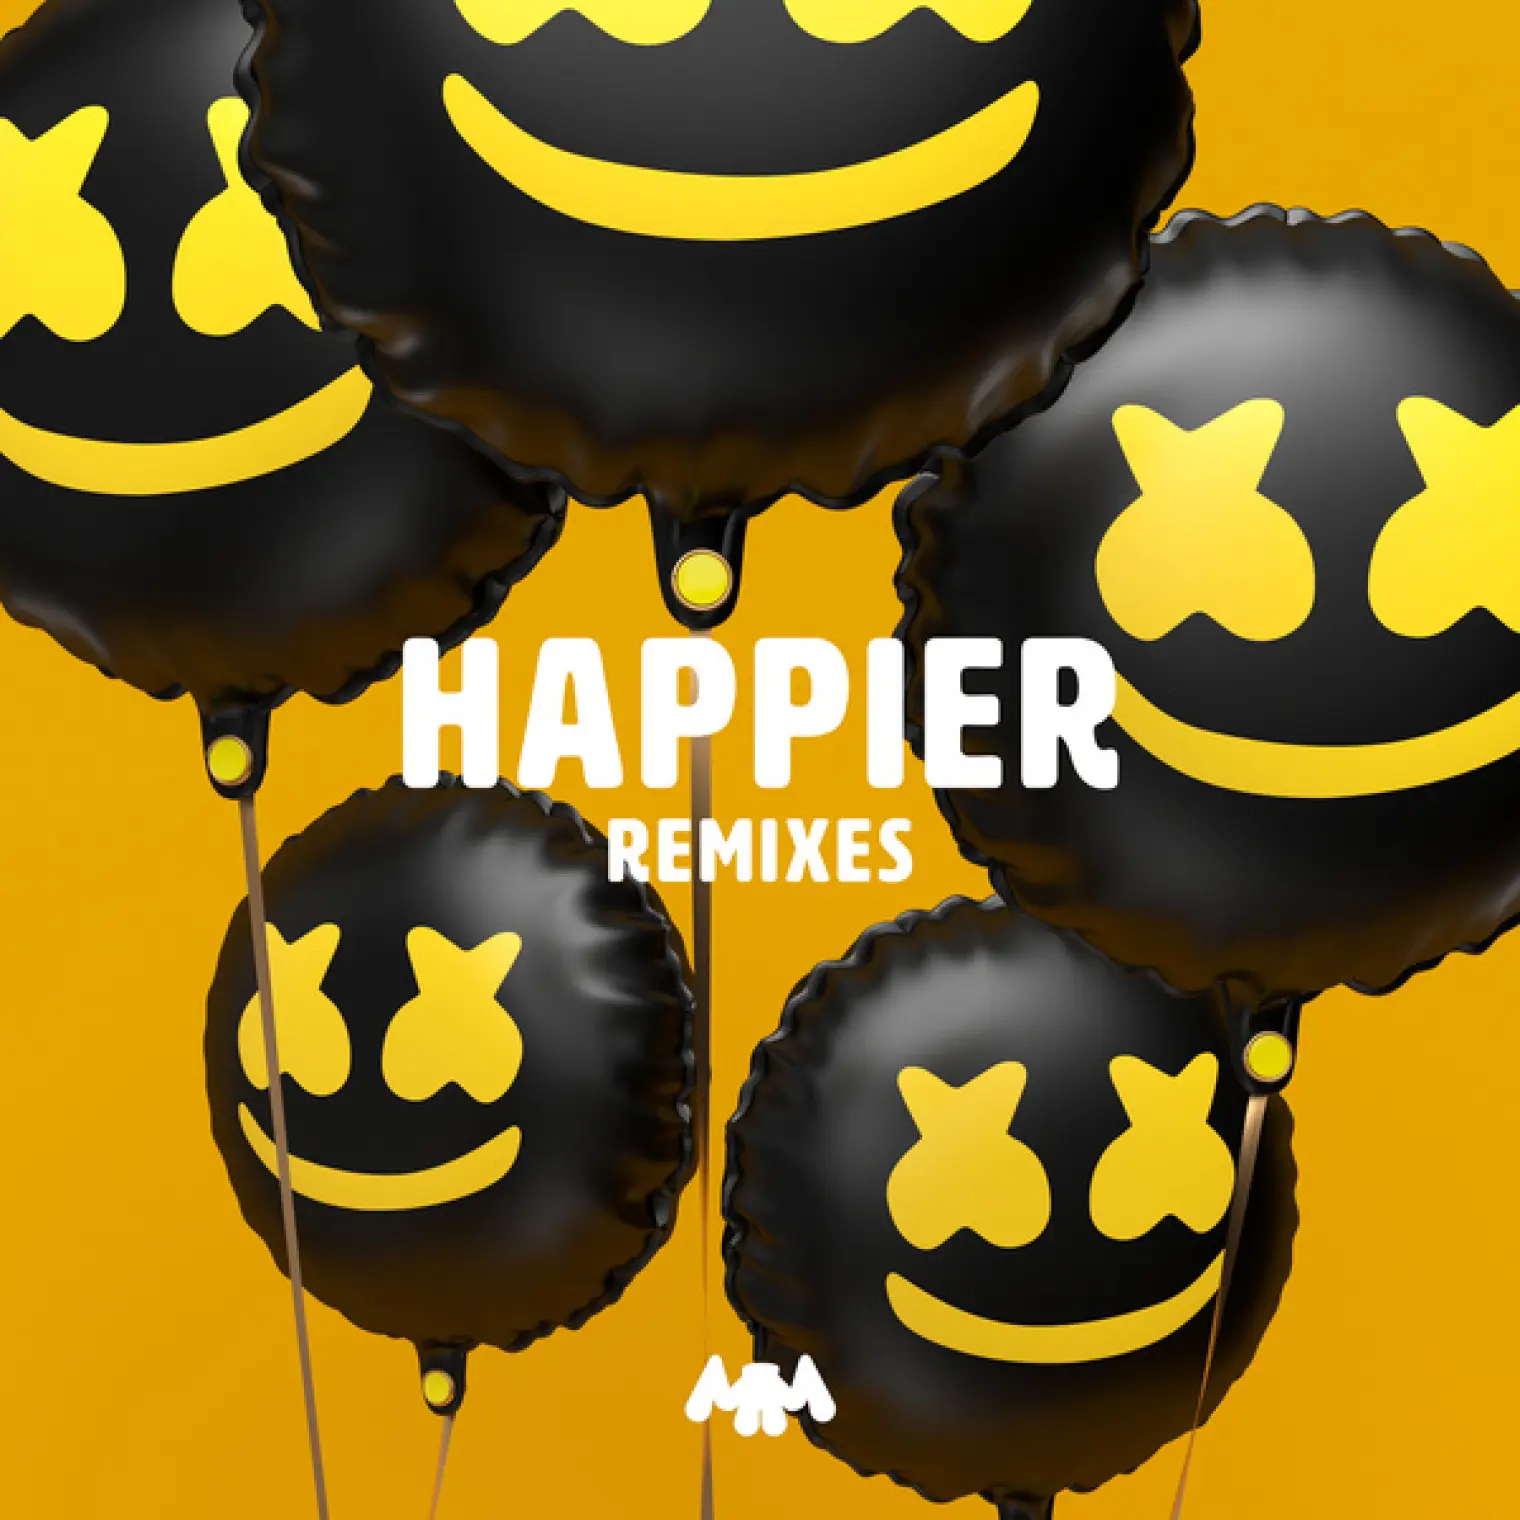 Happier -  Marshmello 